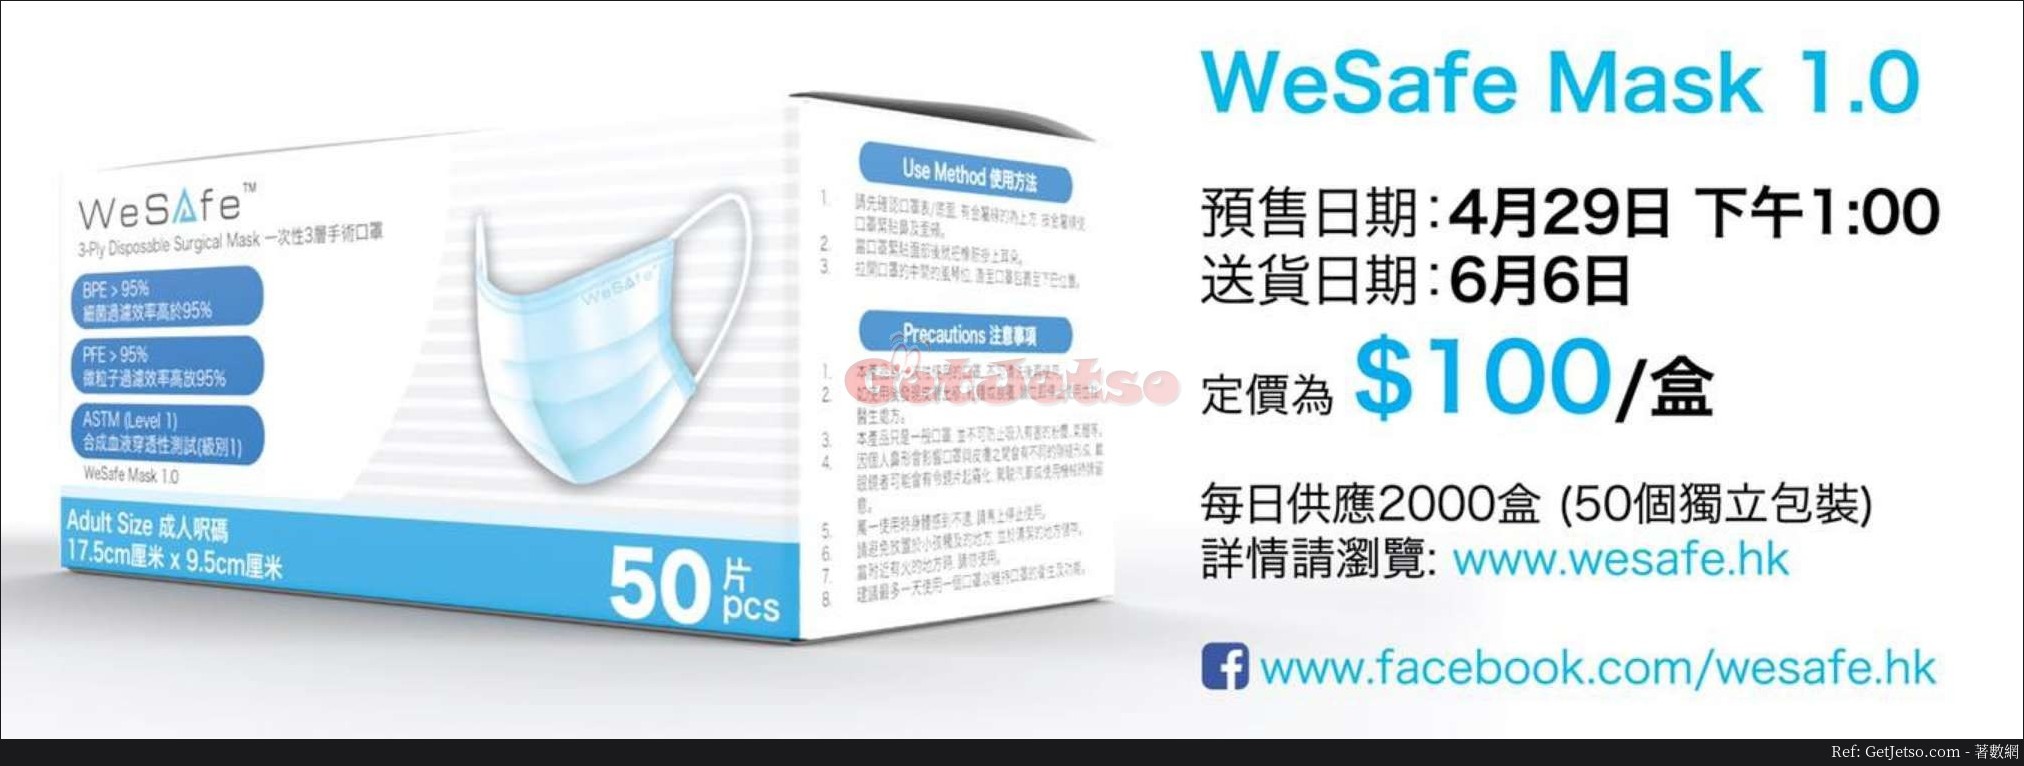 WeSafe Mask 4月29日13:00網上預售口罩0一盒50個圖片1